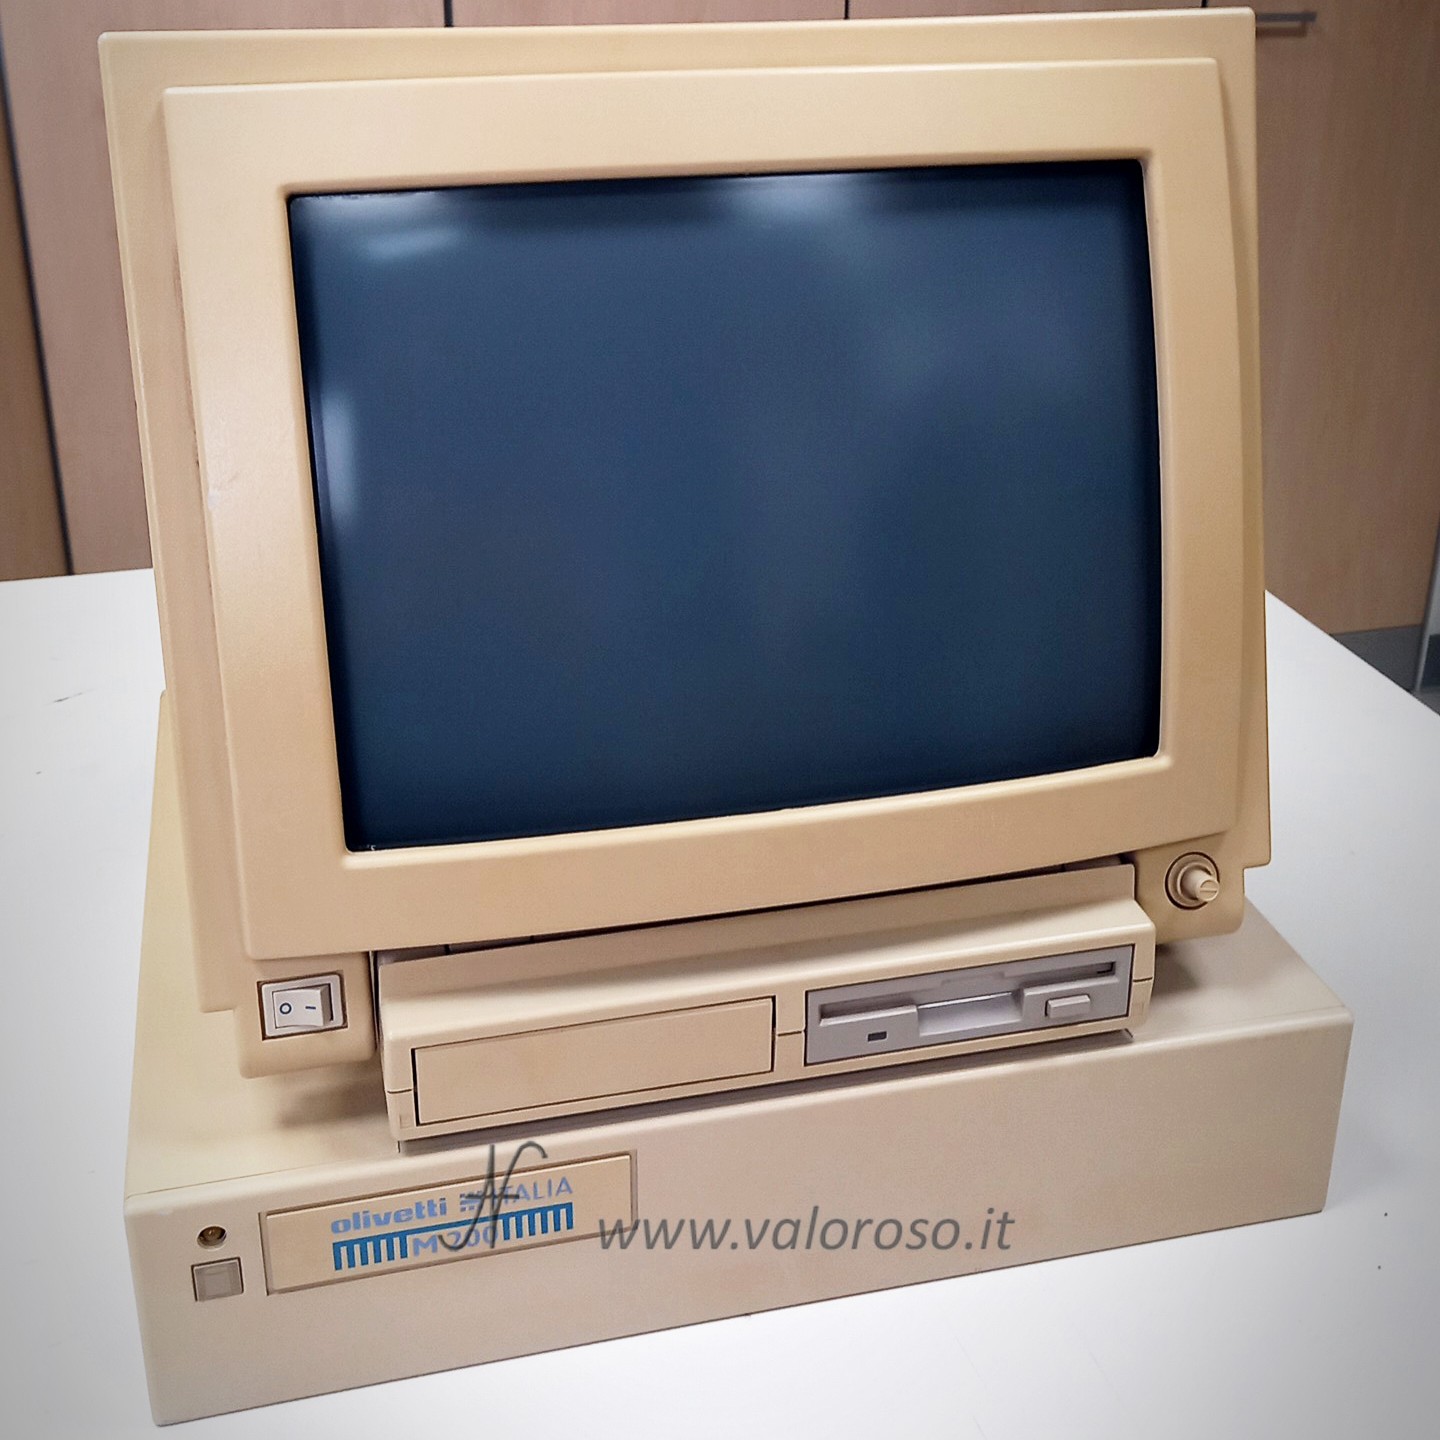 Olivetti M200 computer vintage, senza tastiera, monitor CRT, floppy disk drive 3.5", Olivetti Italia